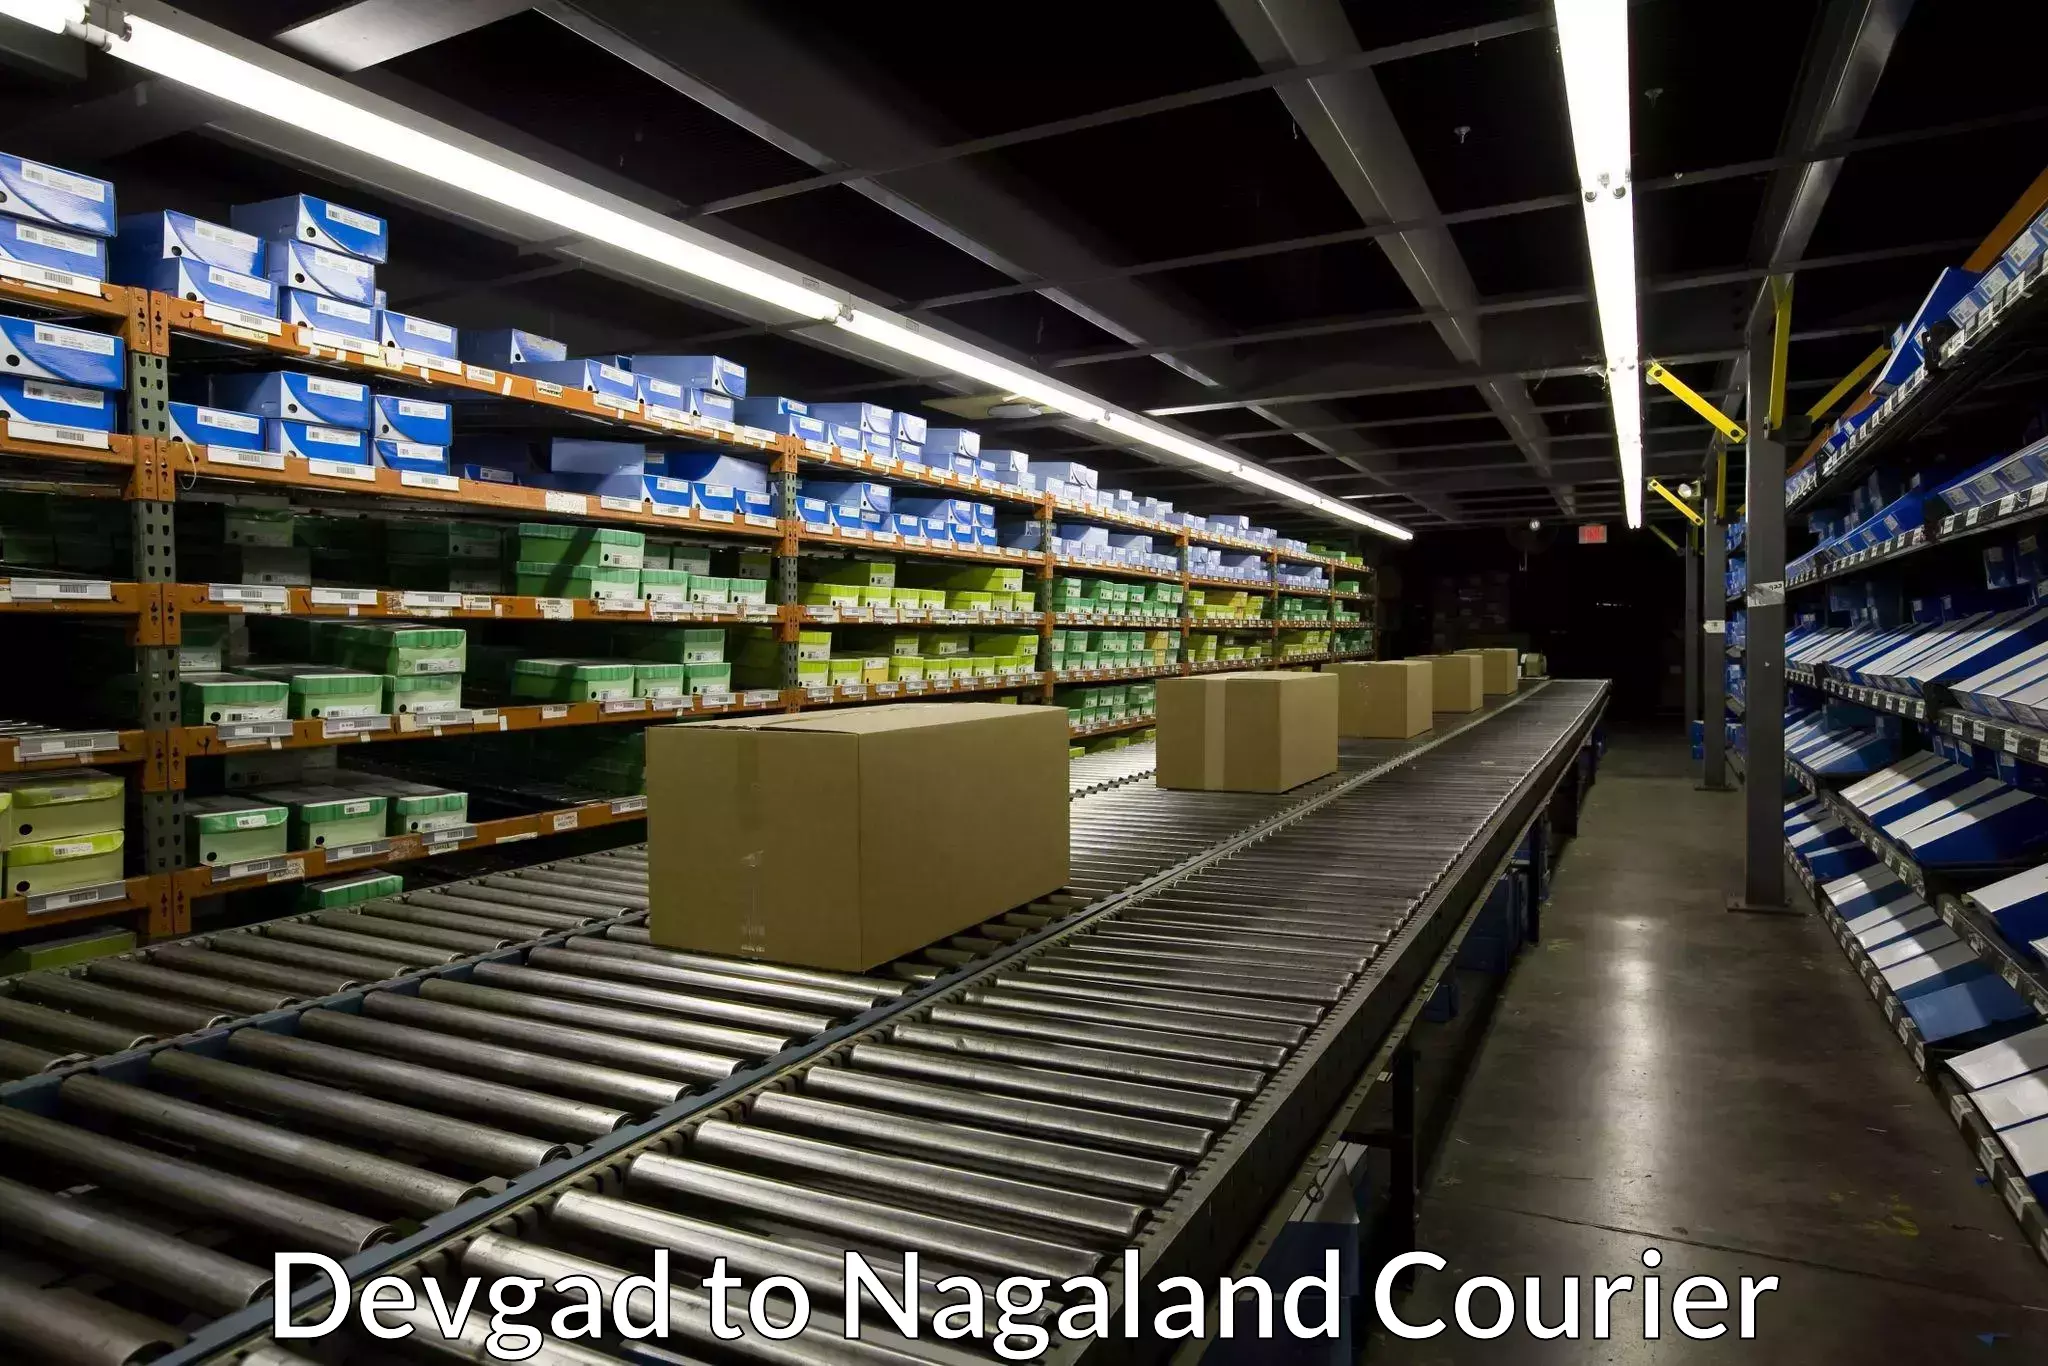 Global logistics network Devgad to Nagaland